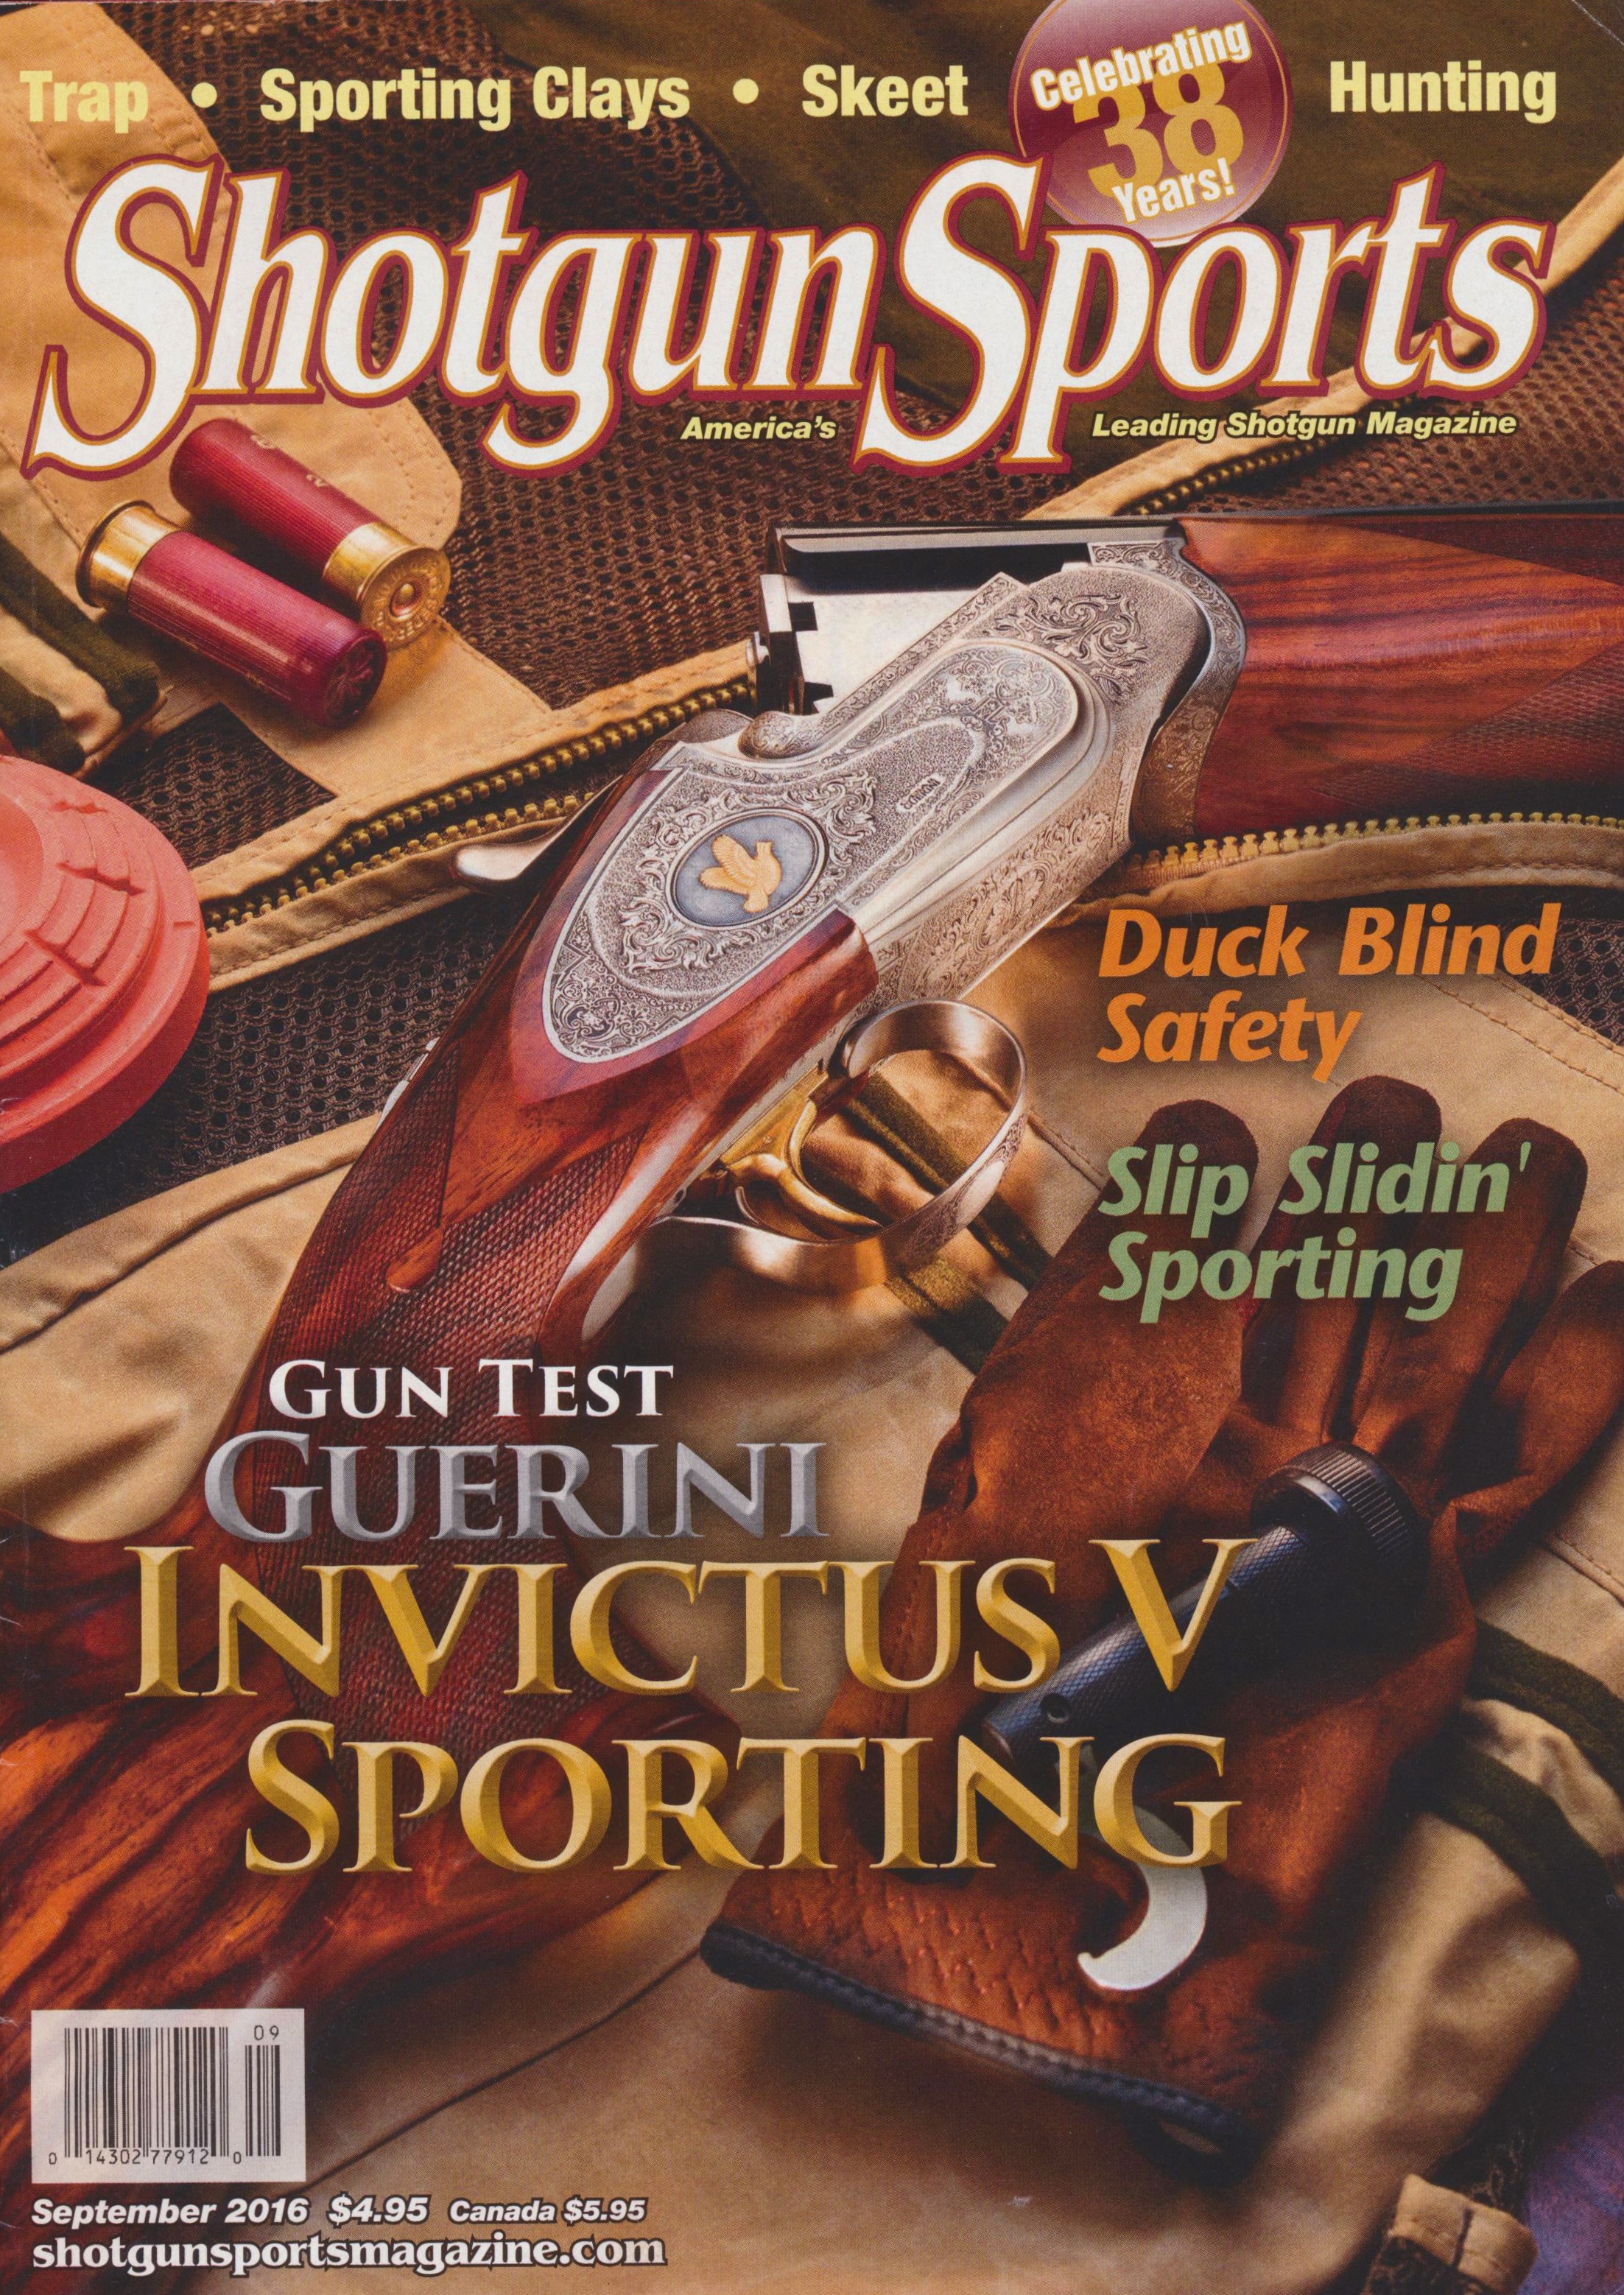 Shotgun Sport